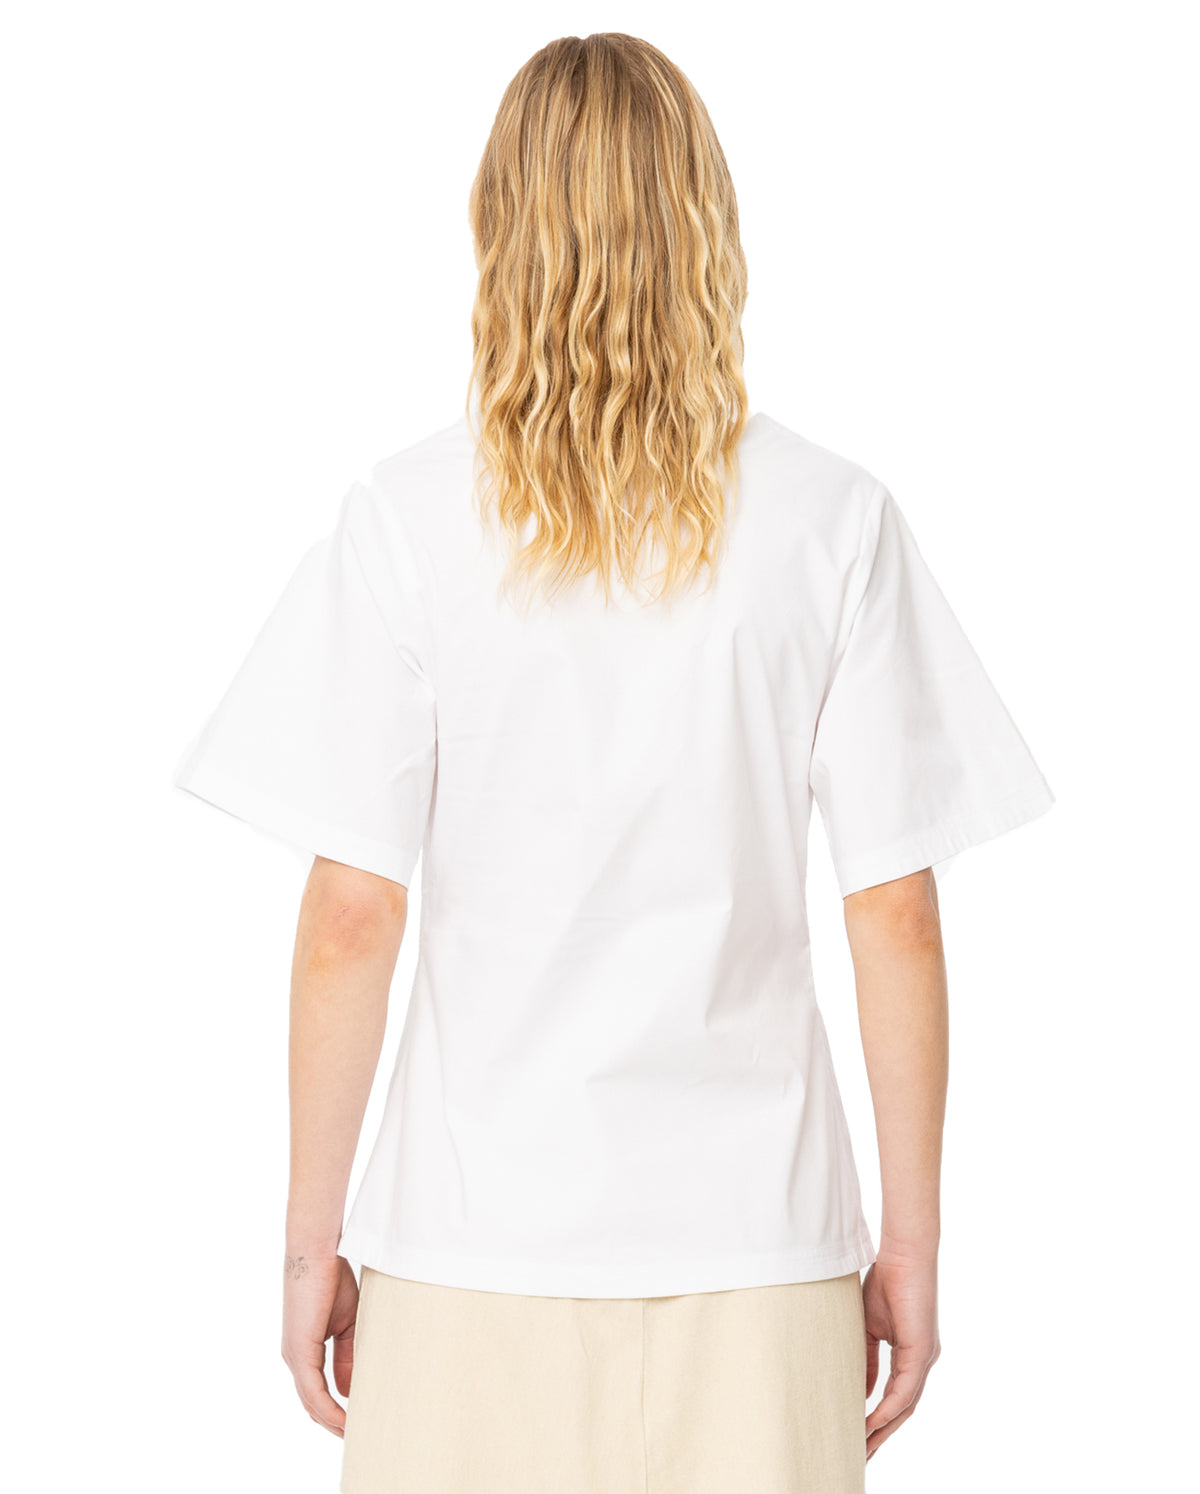 Lunae T-Shirt - Pure White